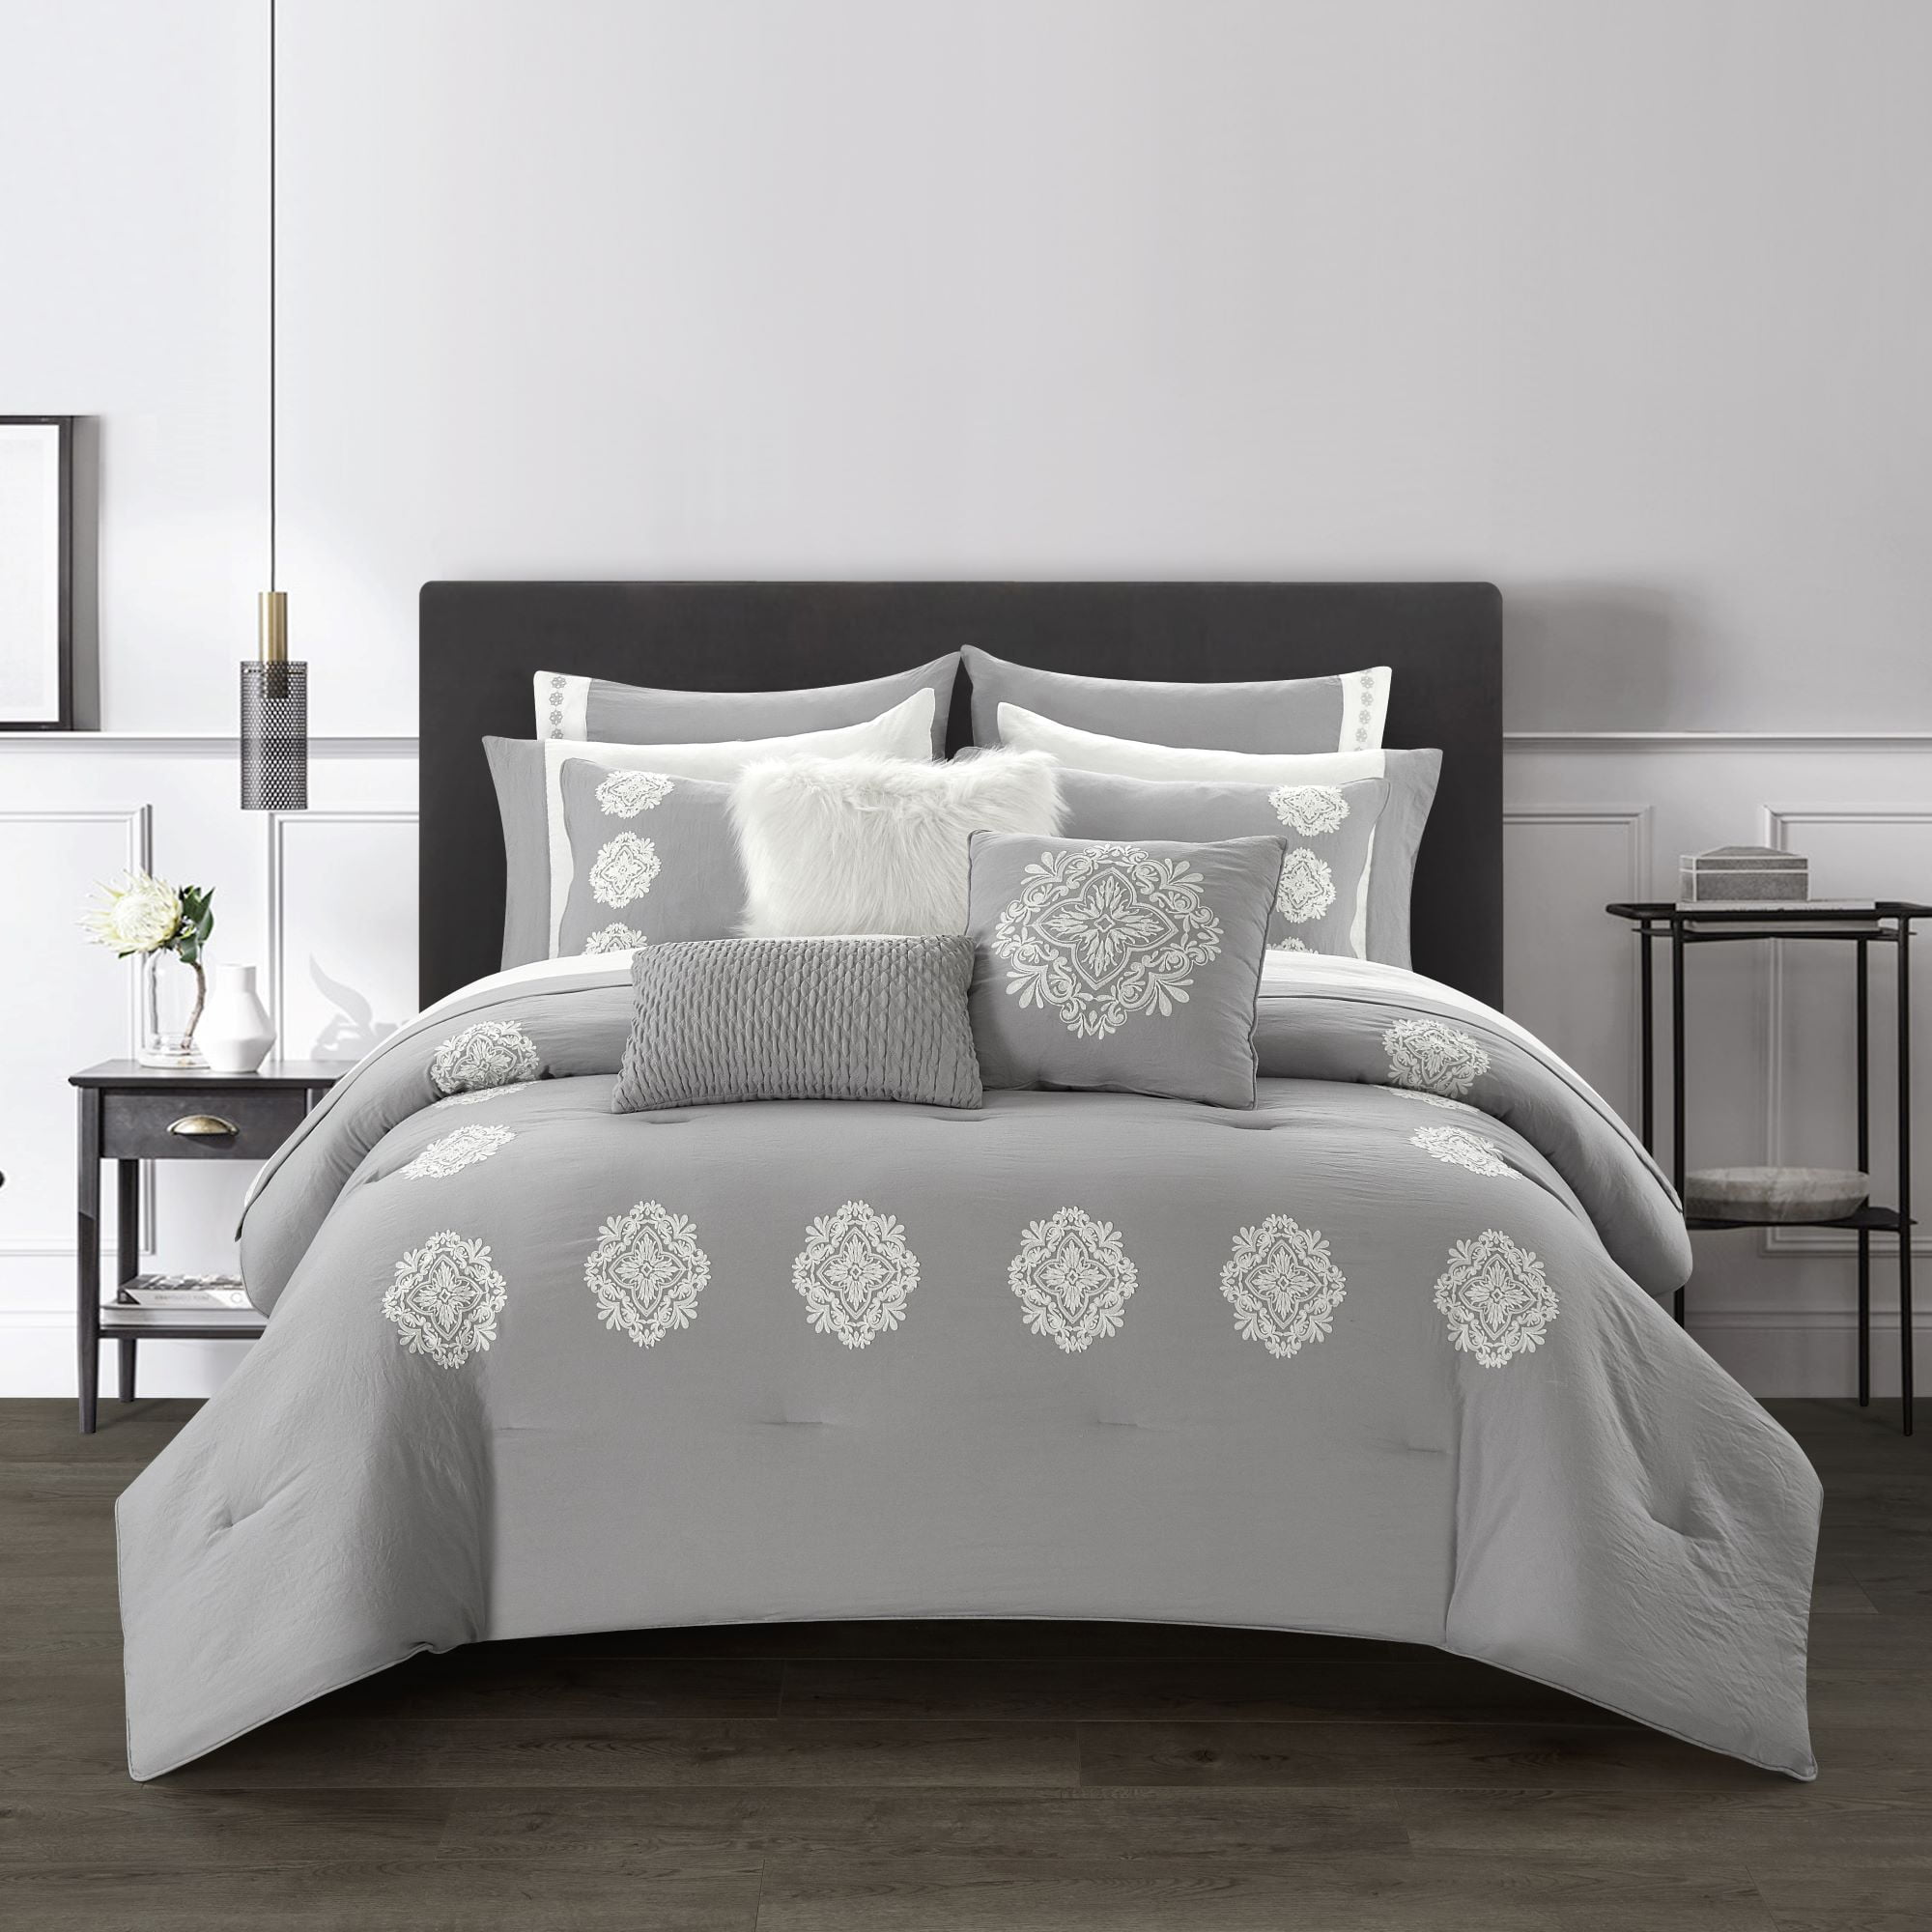 Better Homes & Gardens Medallion 12-Piece Soft Silver Bed in a Bag Bedding Set, King - Walmart.com